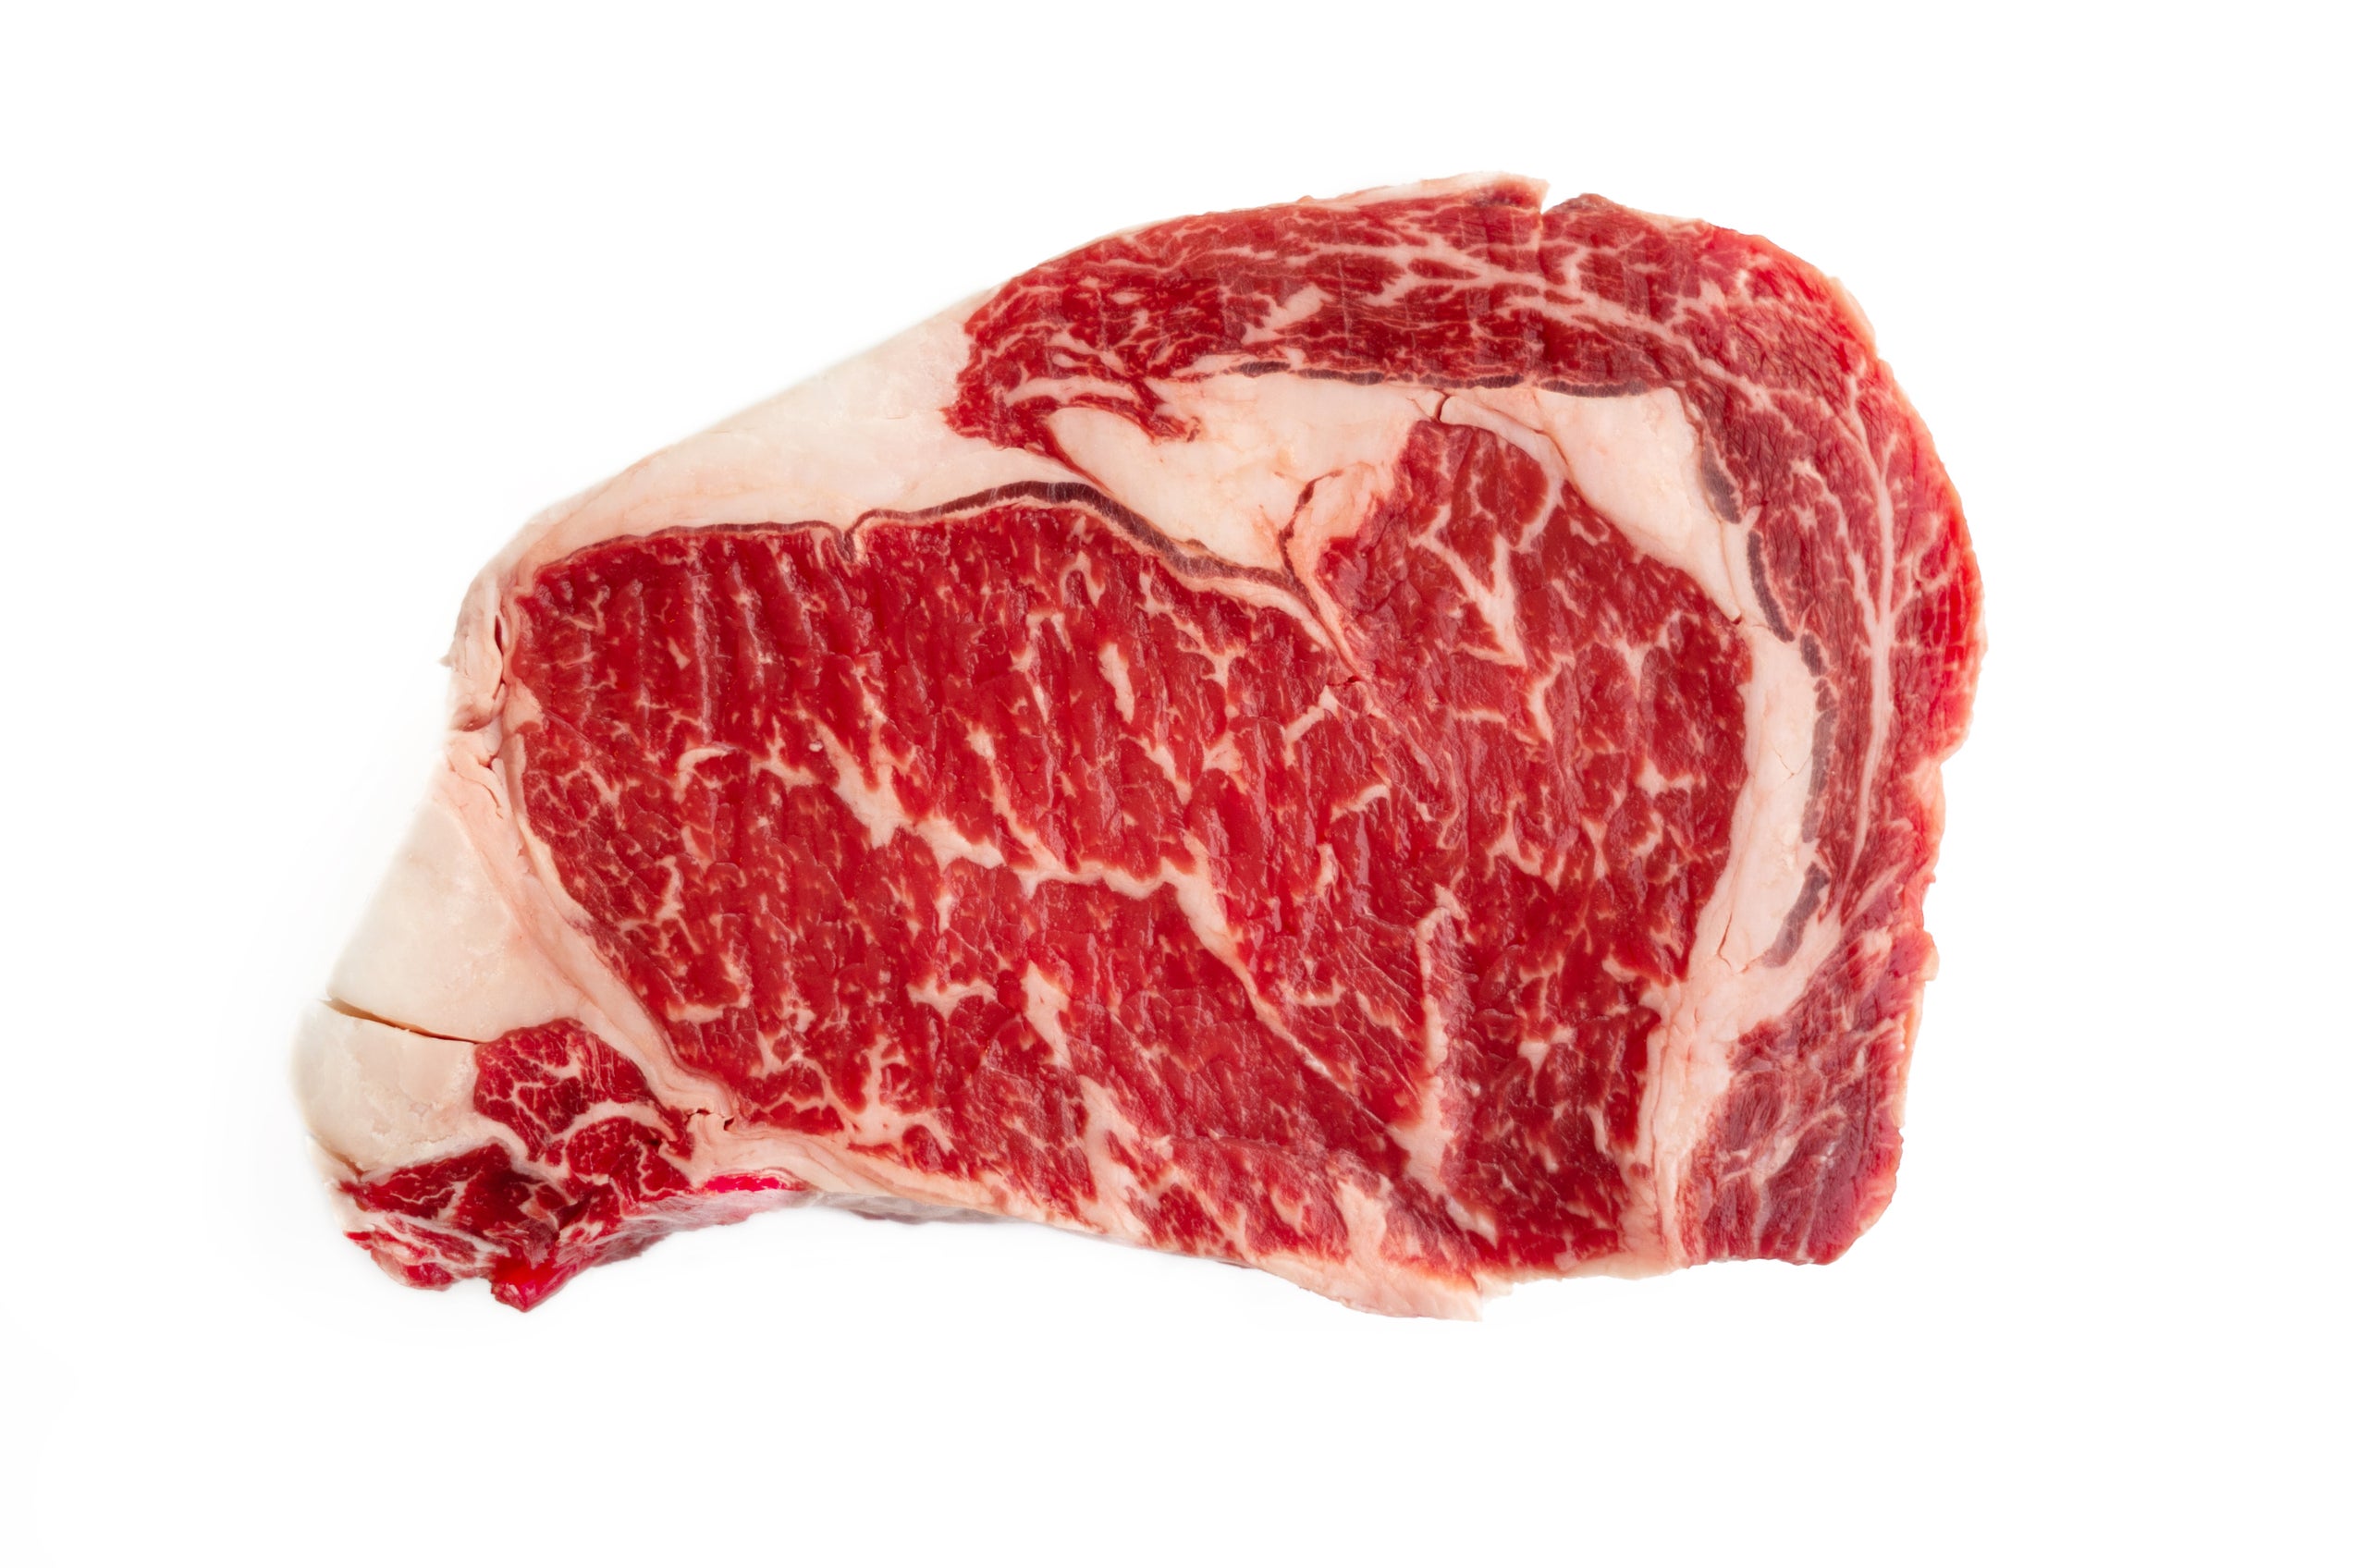 USDA Prime Boneless Ribeye Steak